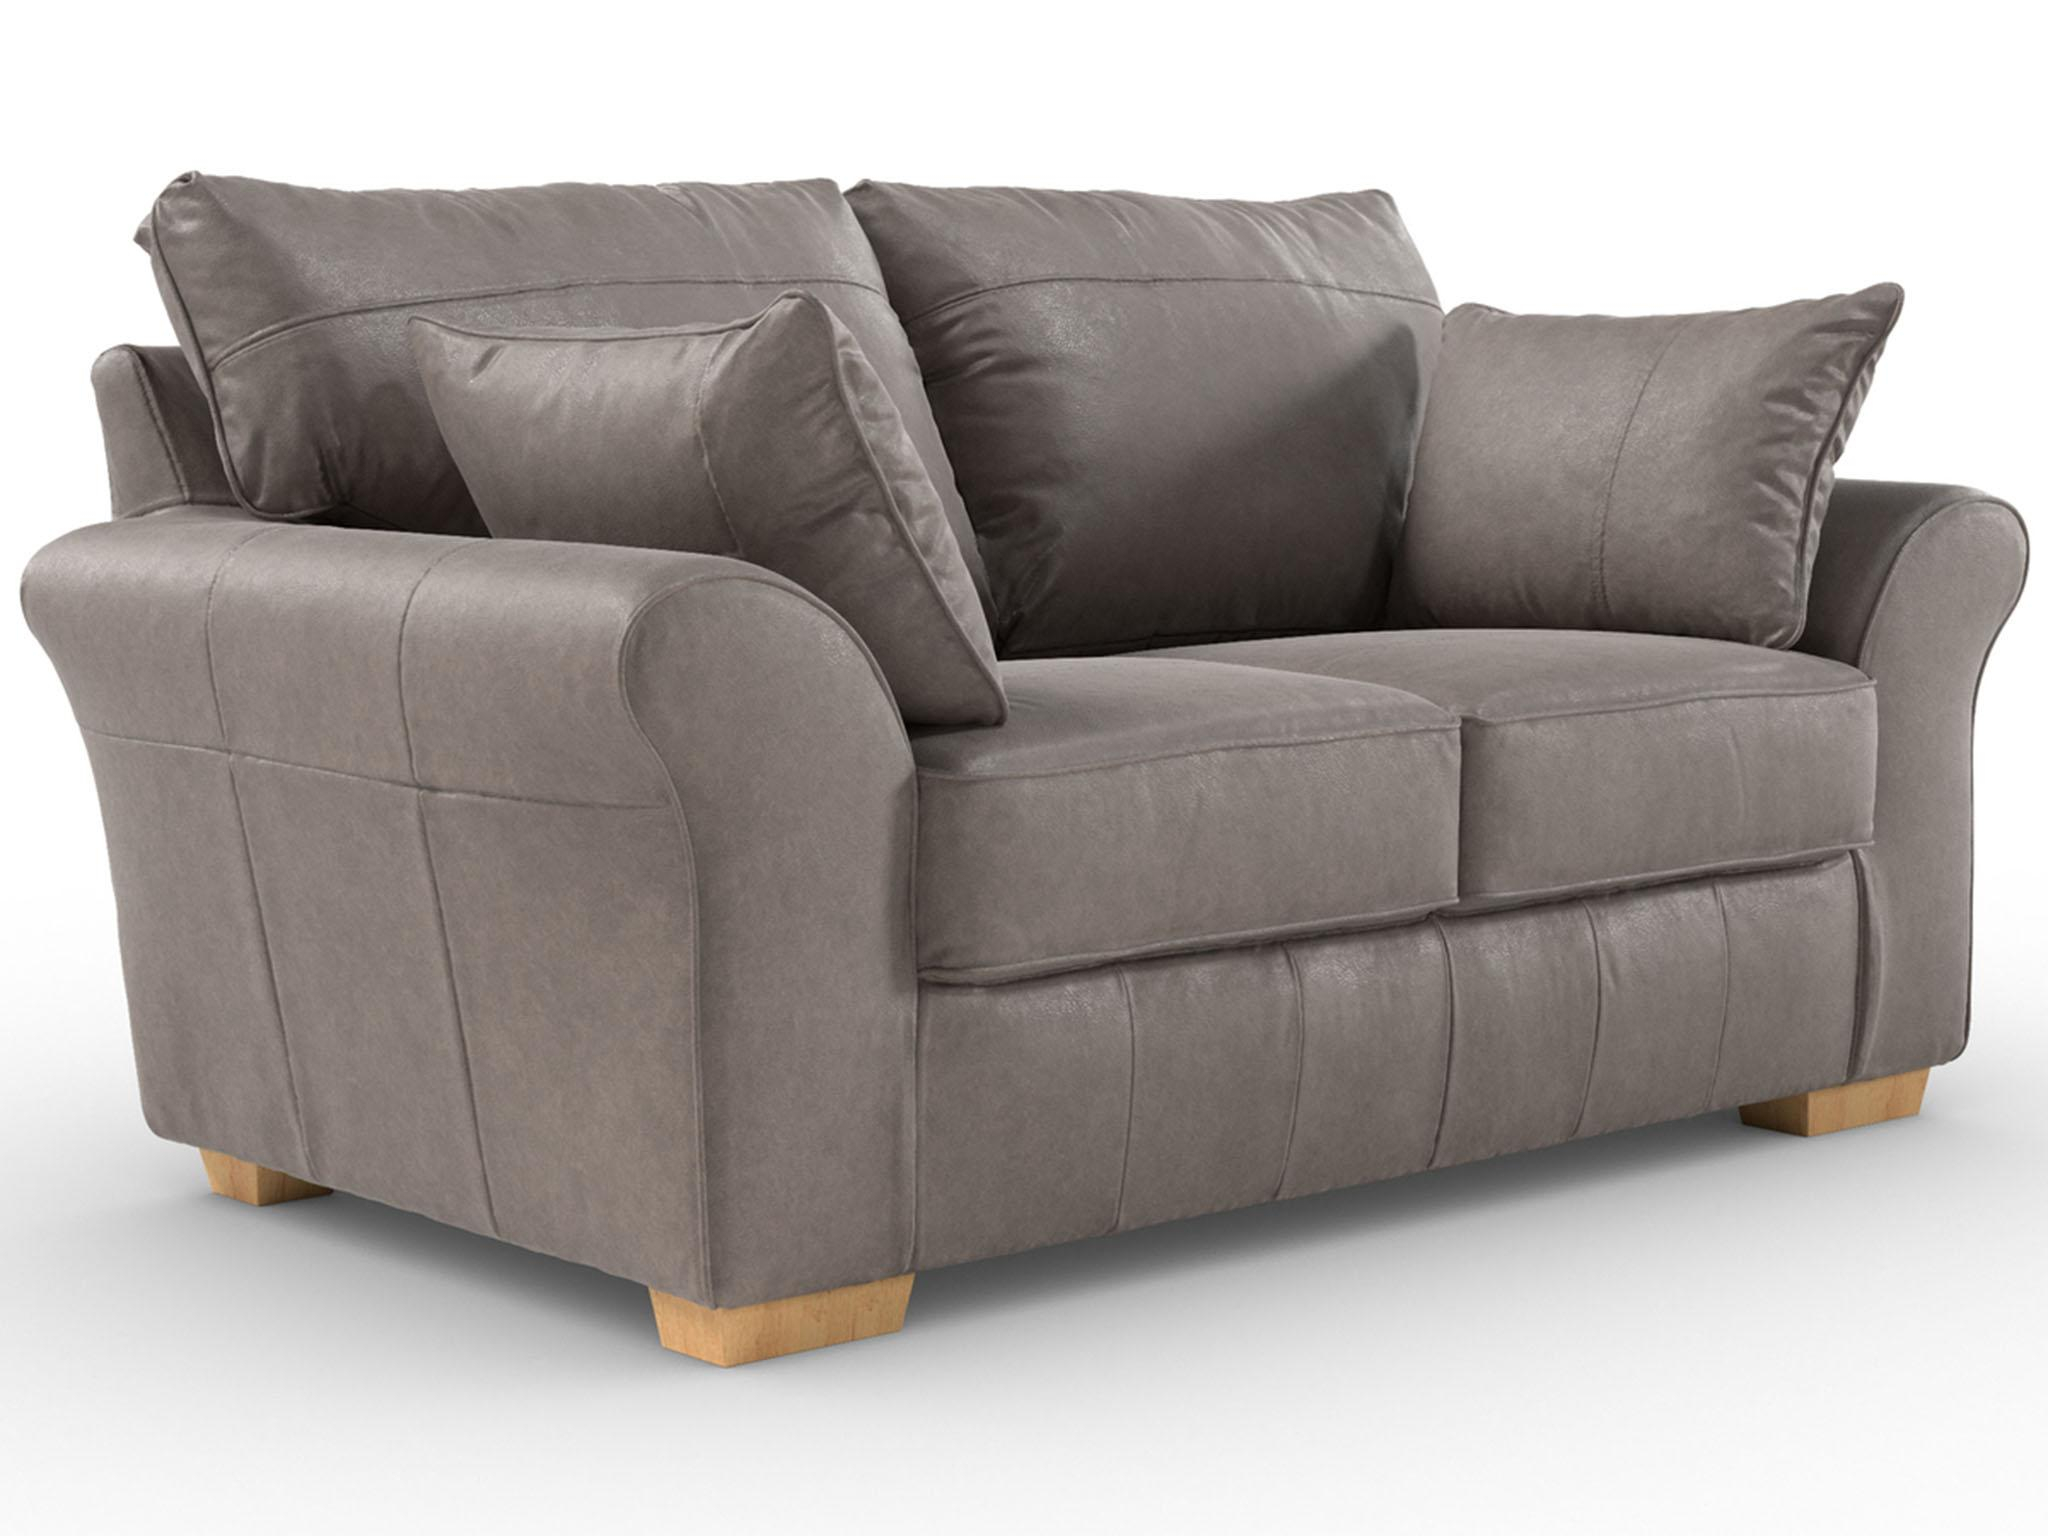 slim leather sofa uk